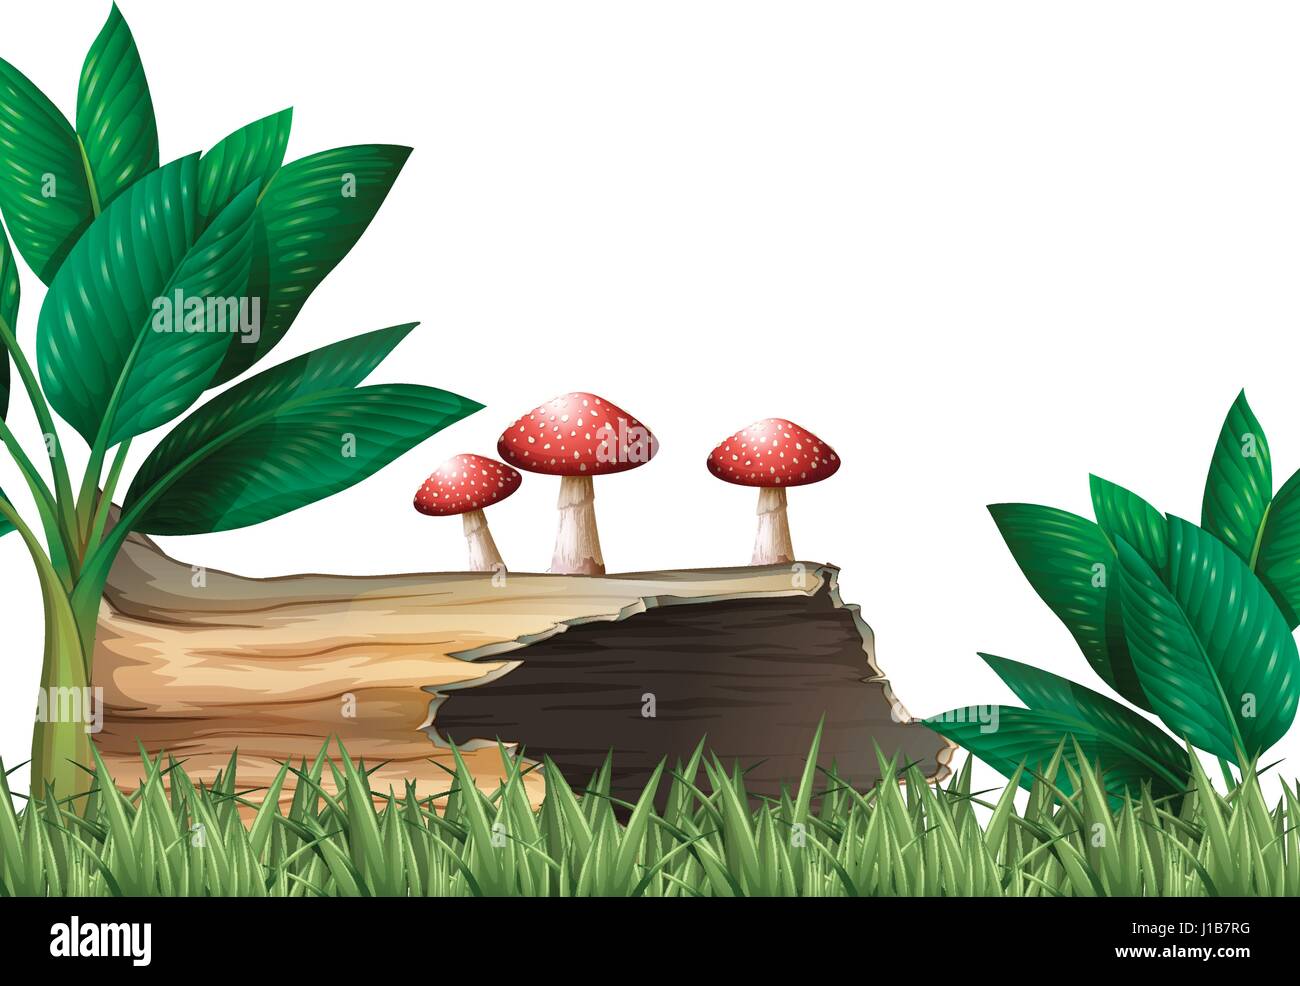 Garden scene with log and mushrooms illustration Stock Vector